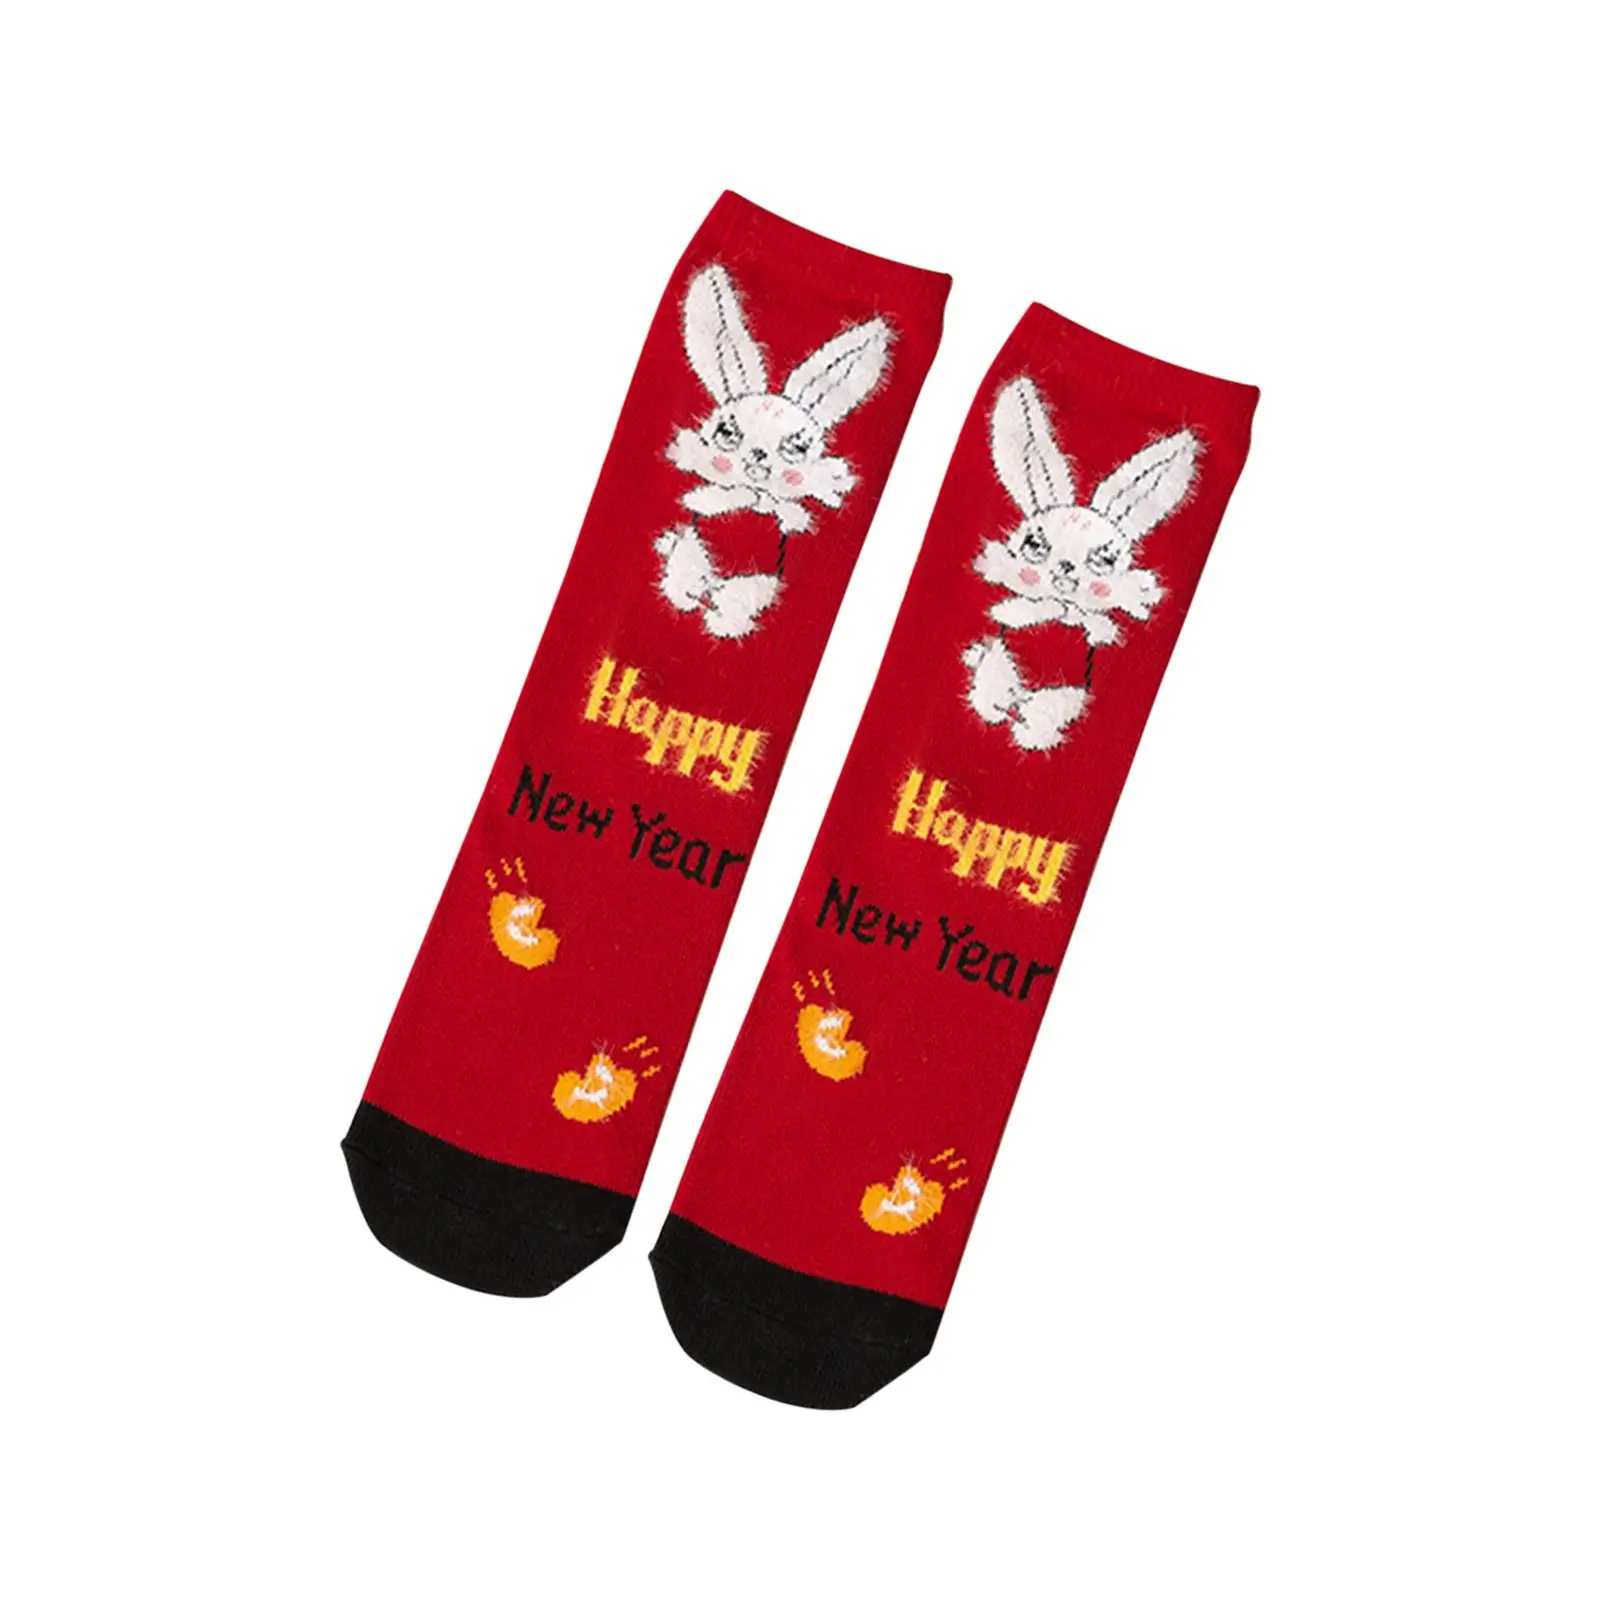 Novelty Children Stockings Casual Socks New Year Socks Long Stockings Winter Warm Socks for Toddlers Girls Kids Gifts